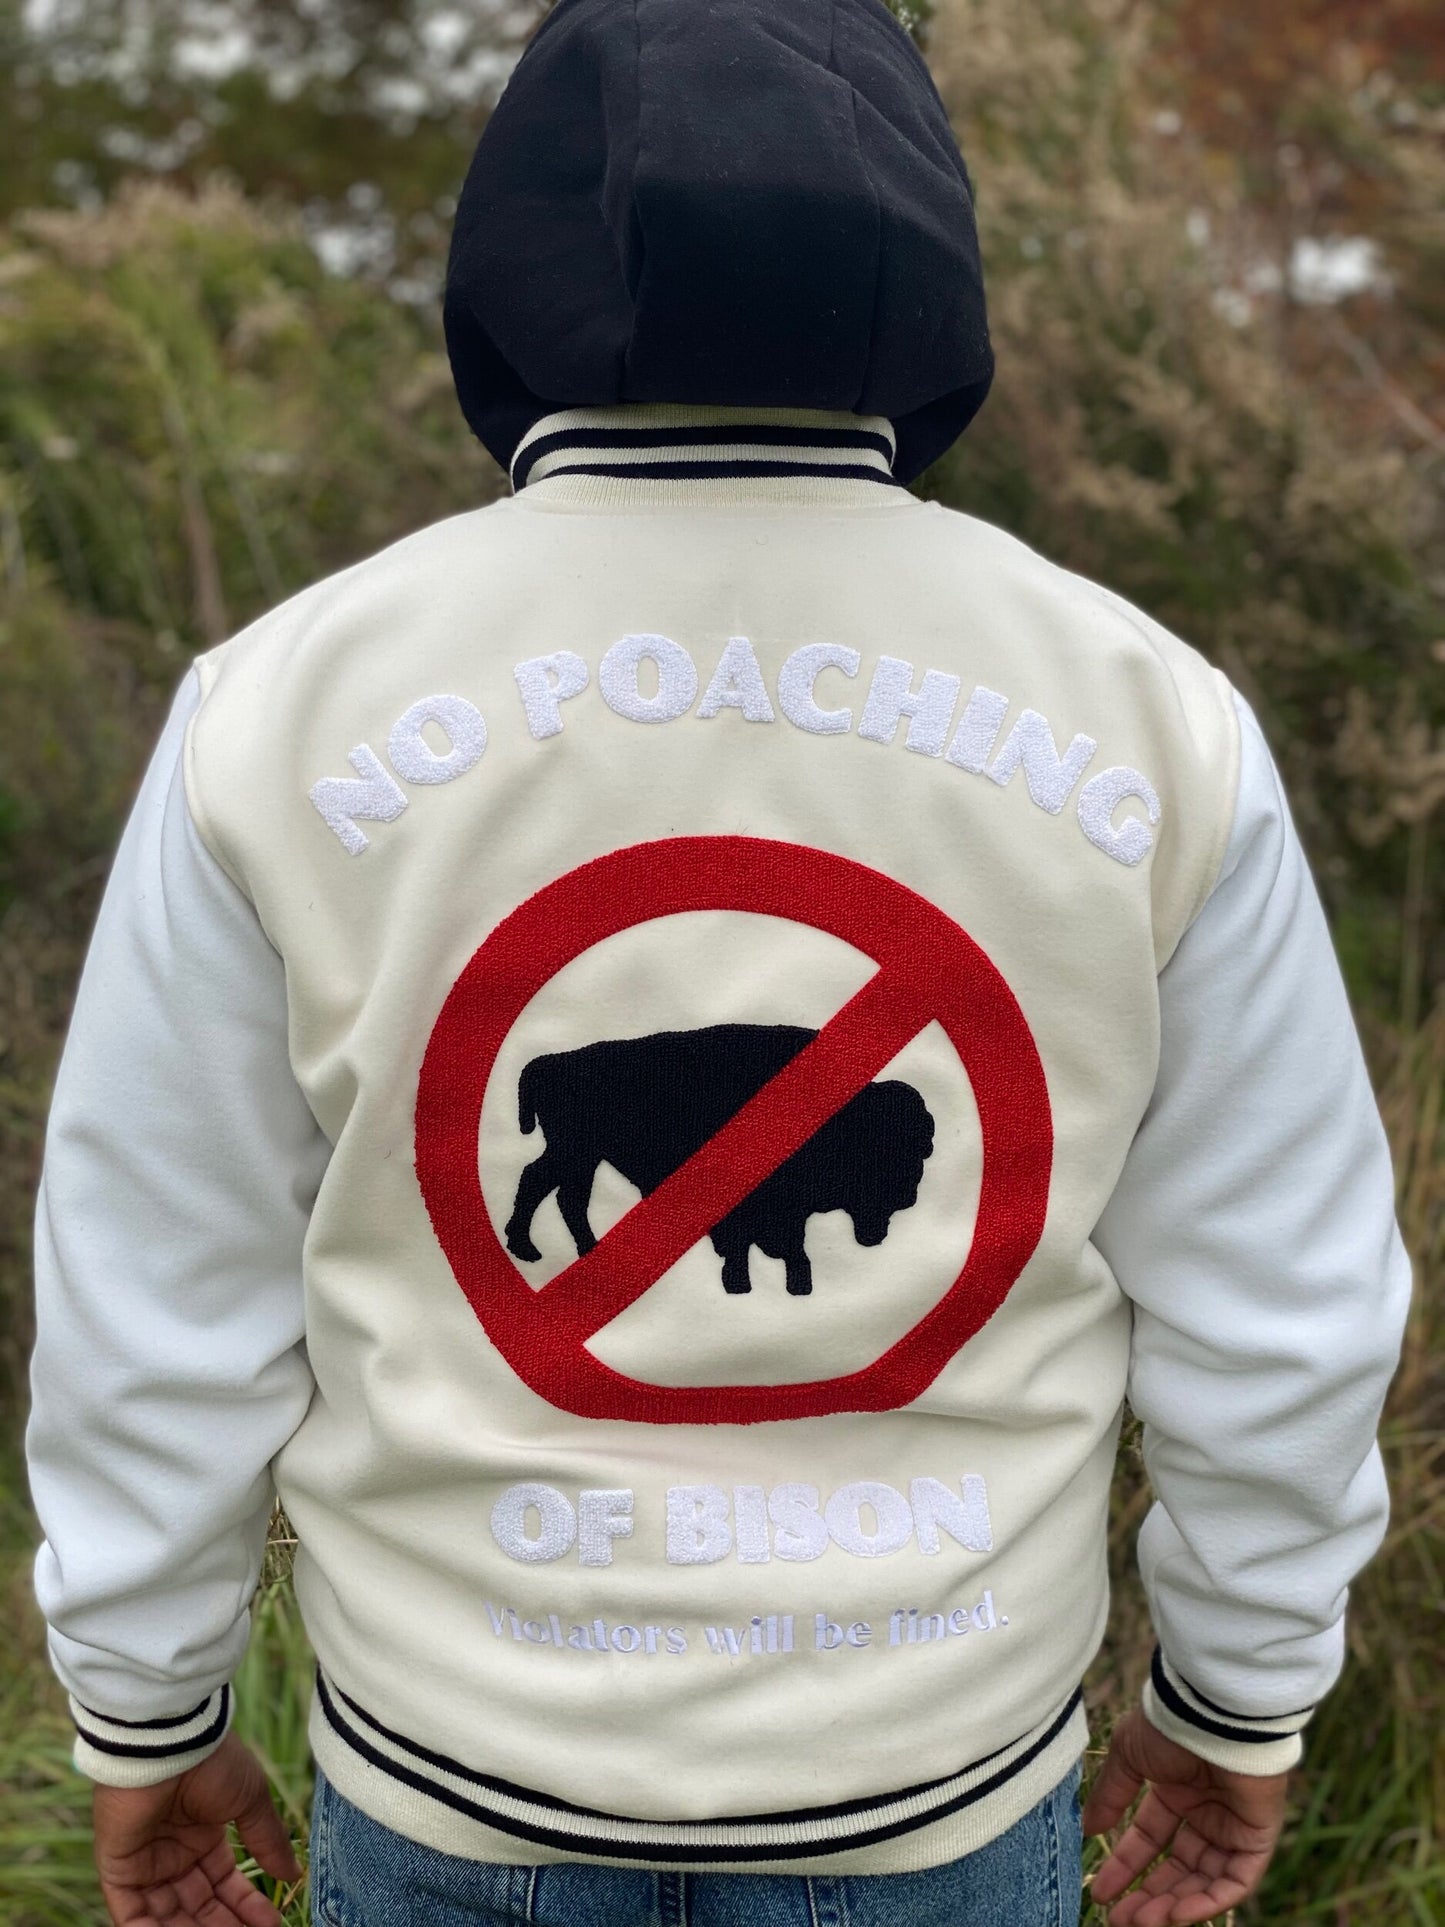 No Poaching Jacket Sail